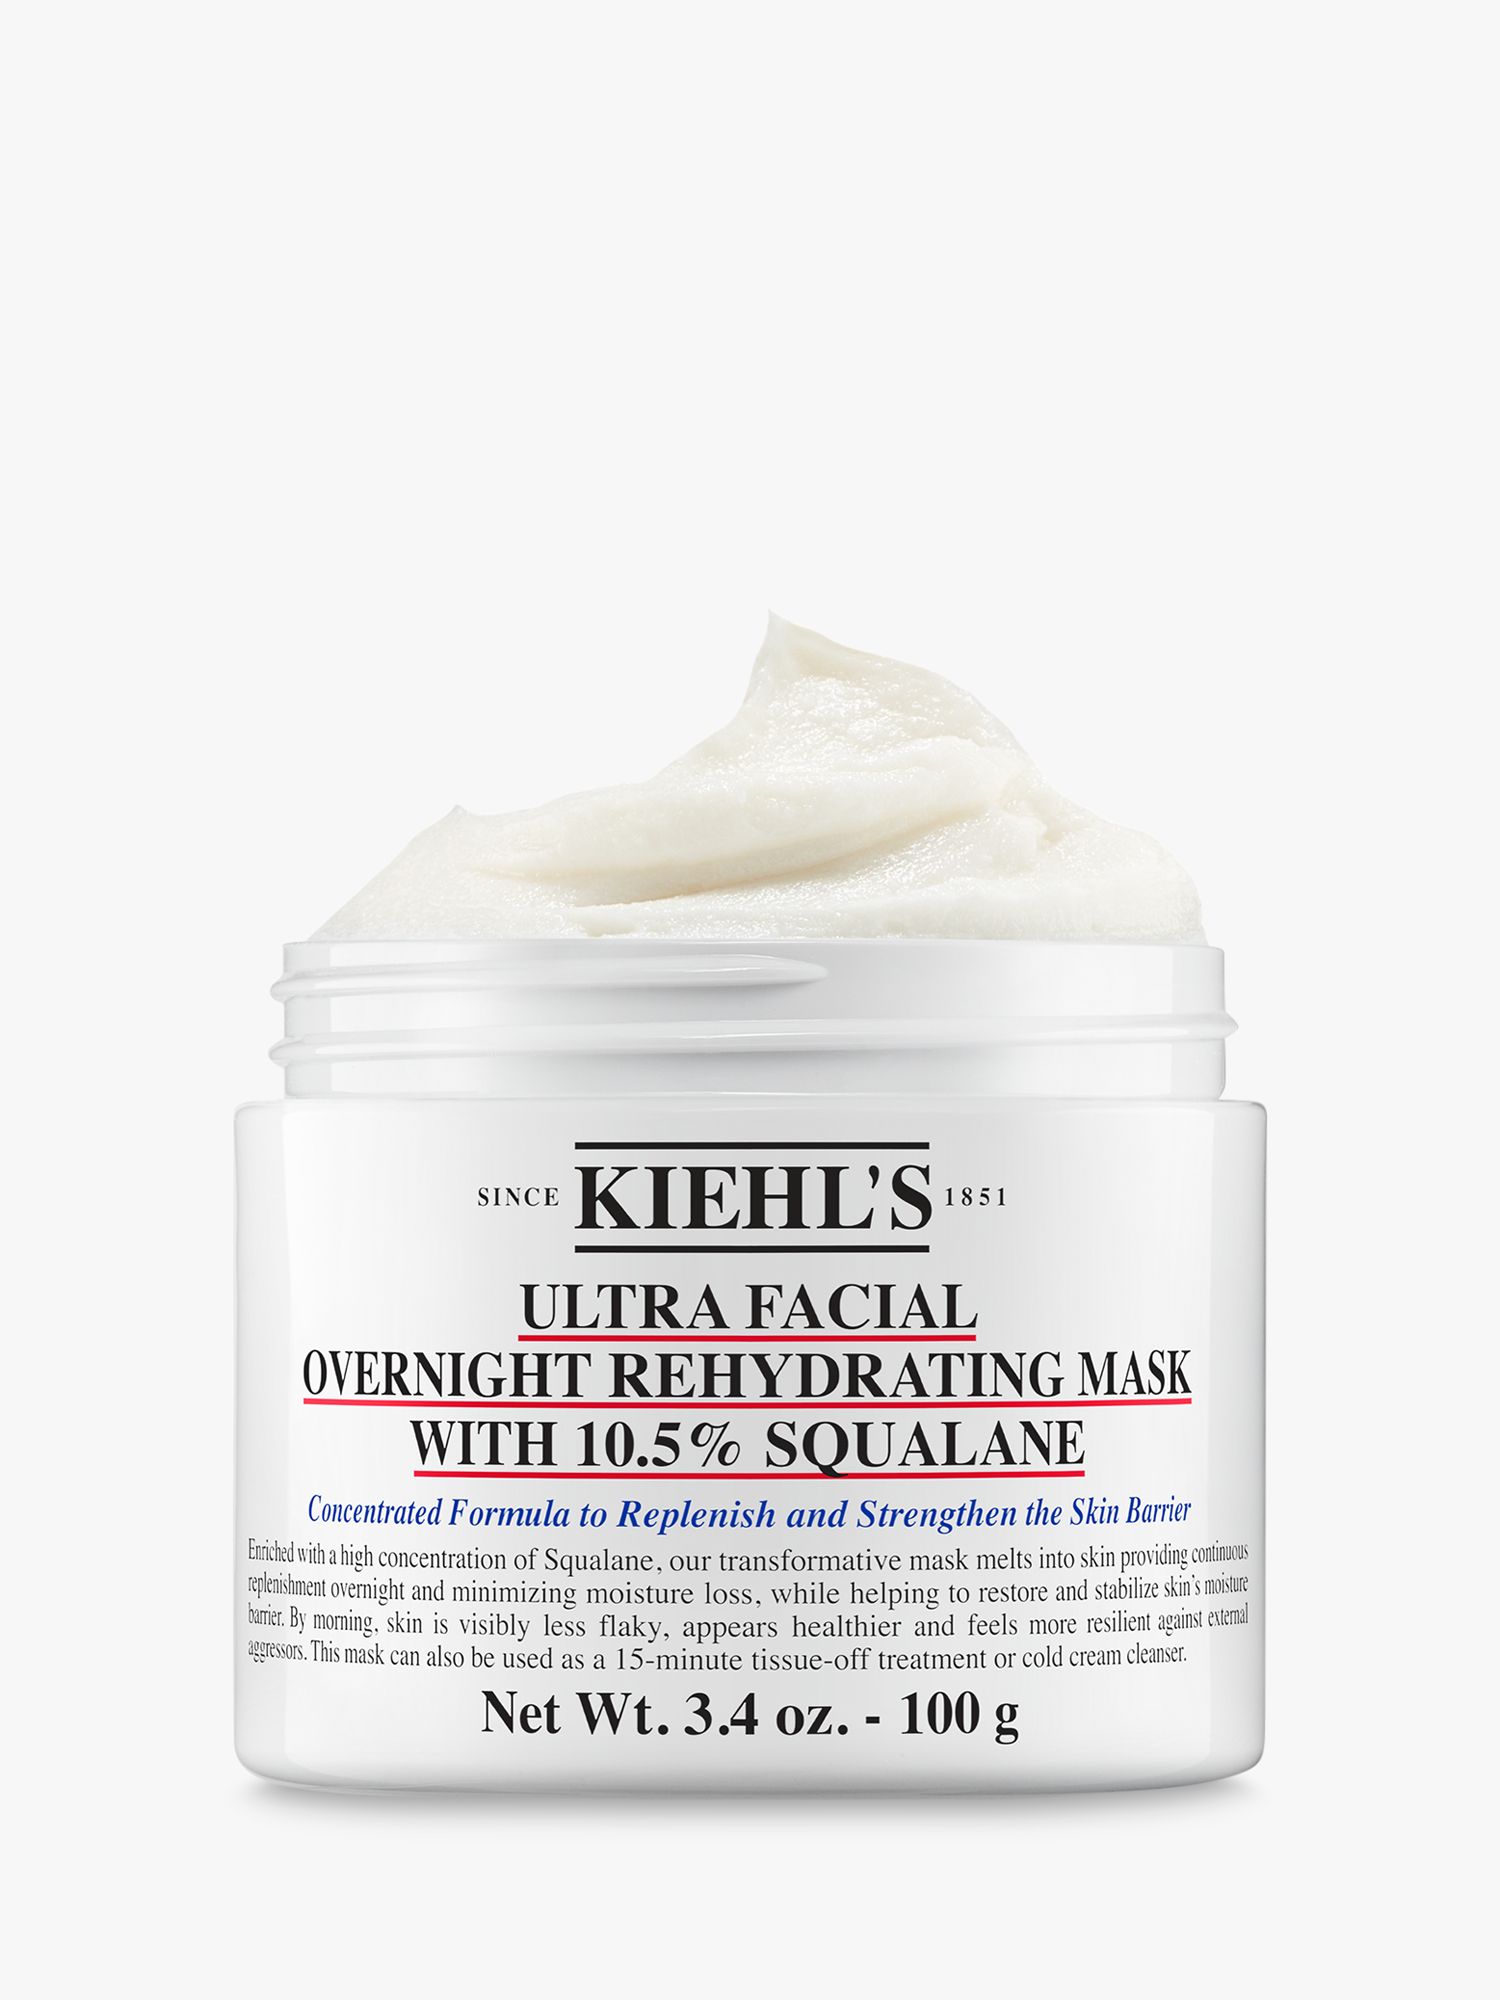 Kiehl's Ultra Facial Overnight Rehydrating Mask, 100g 3